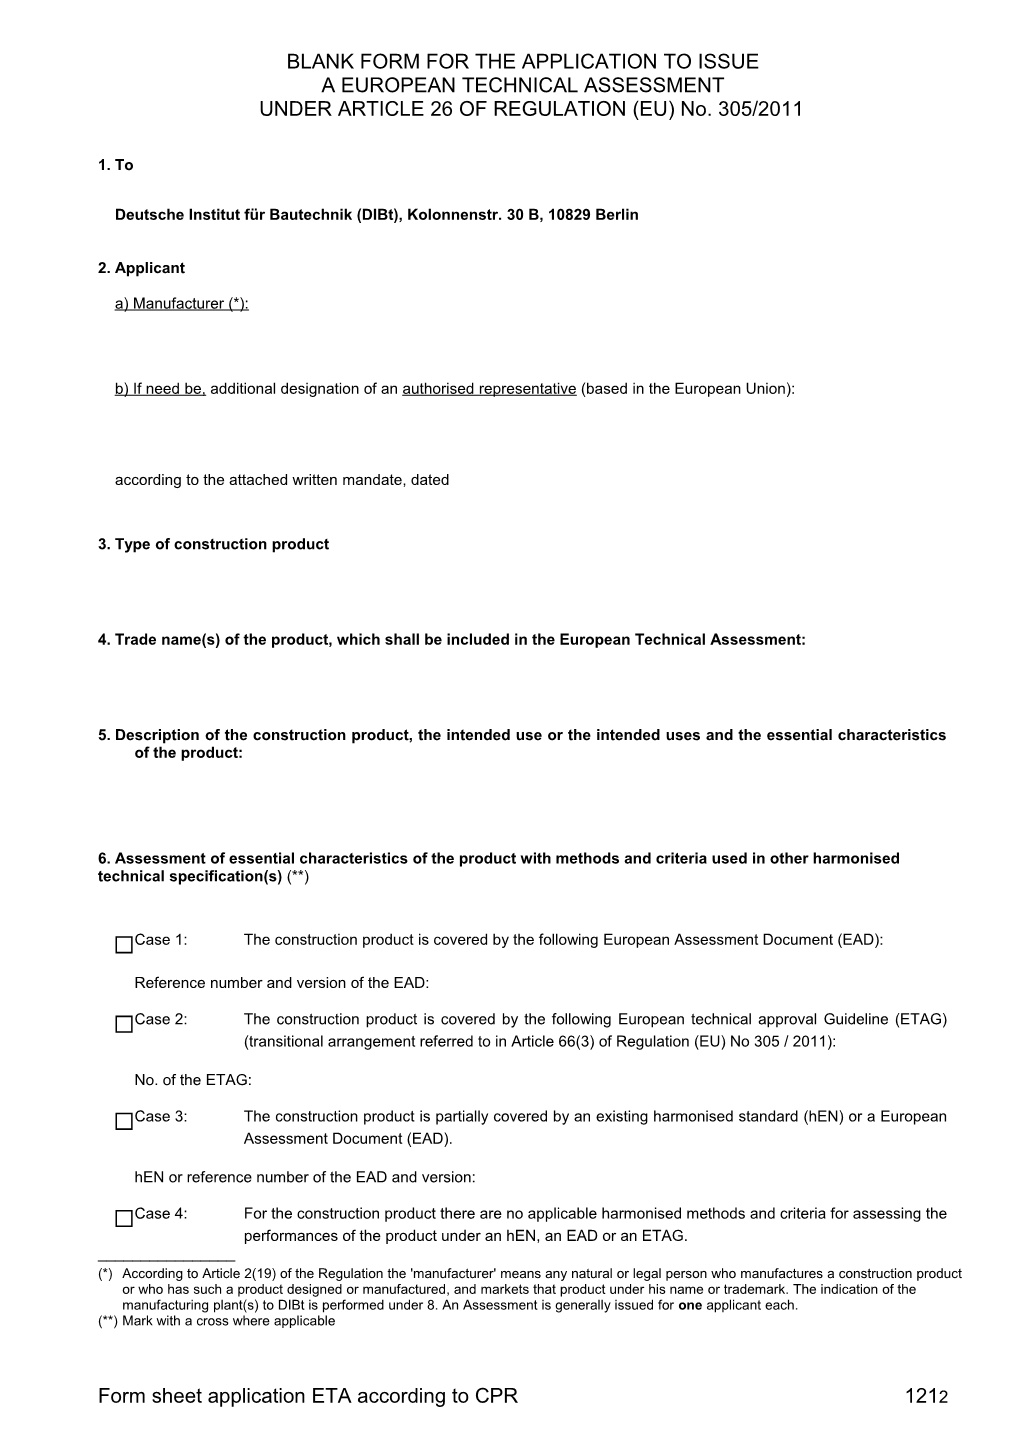 Form Sheet Application ETA According to CPR